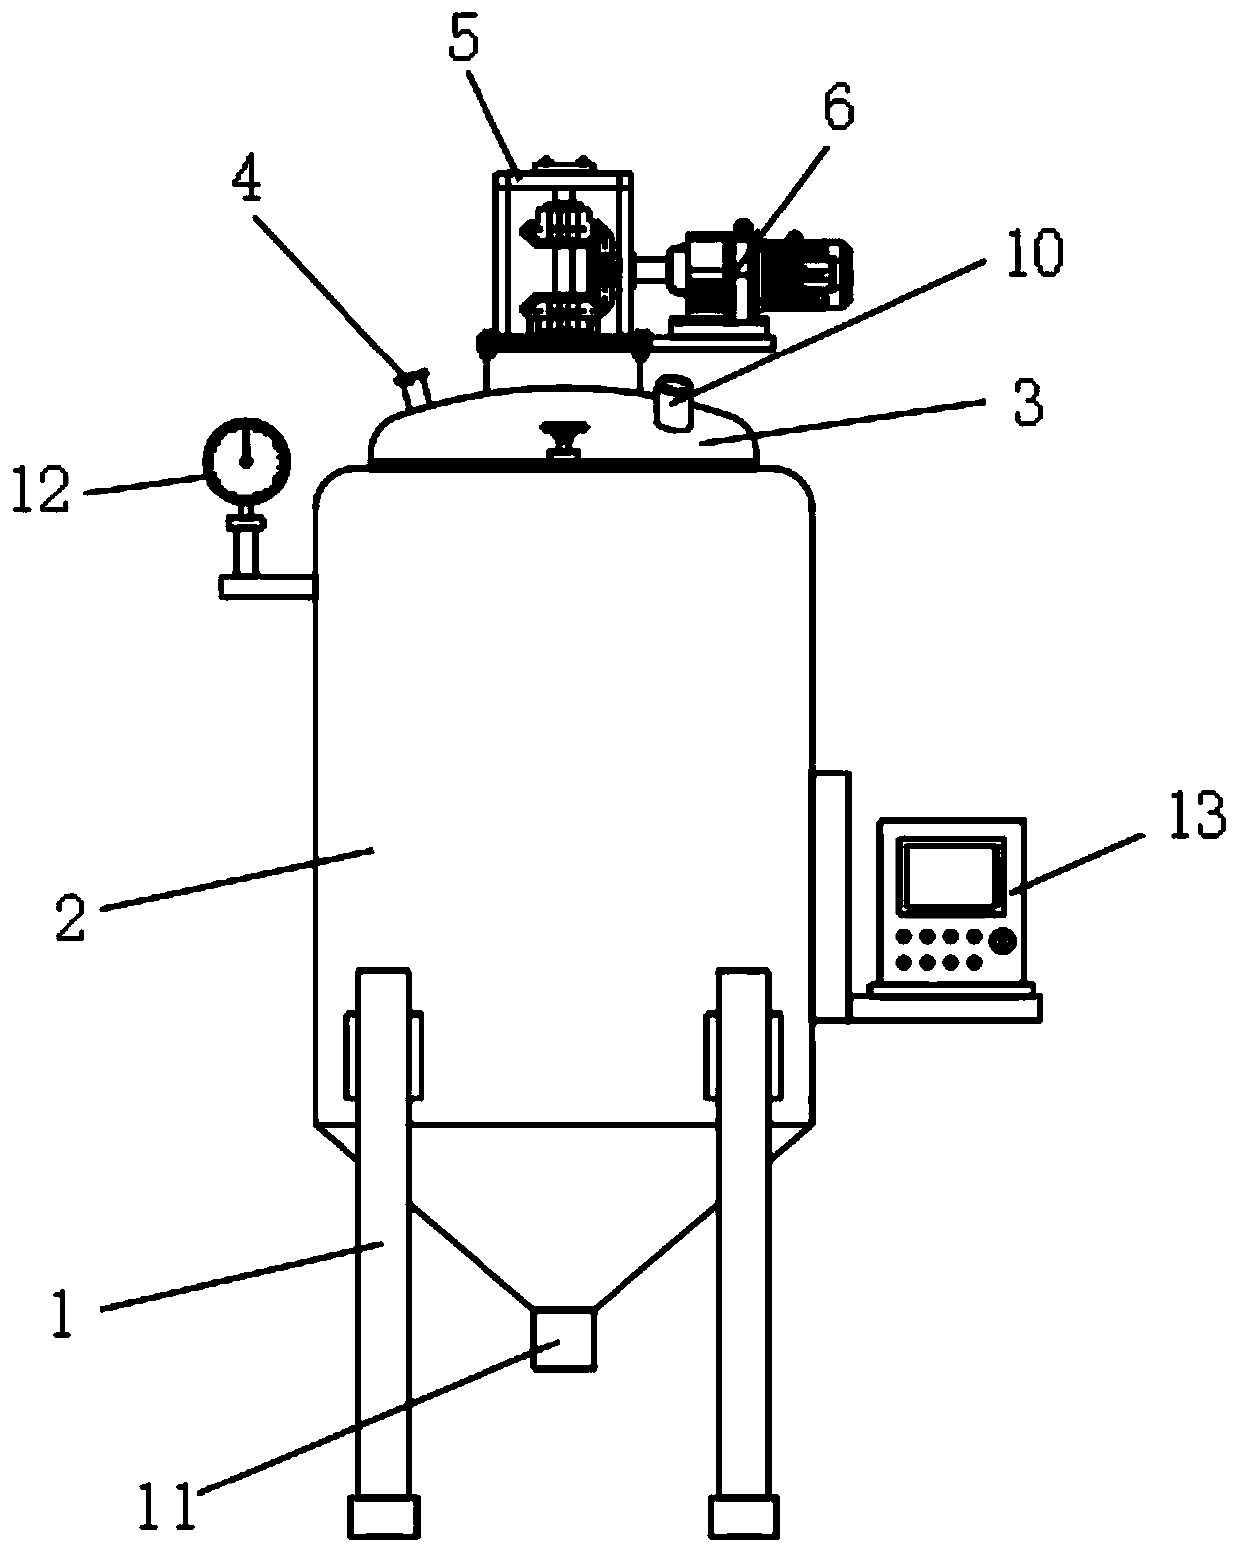 Novel crystallization kettle capable of improving evaporative crystallization efficiency